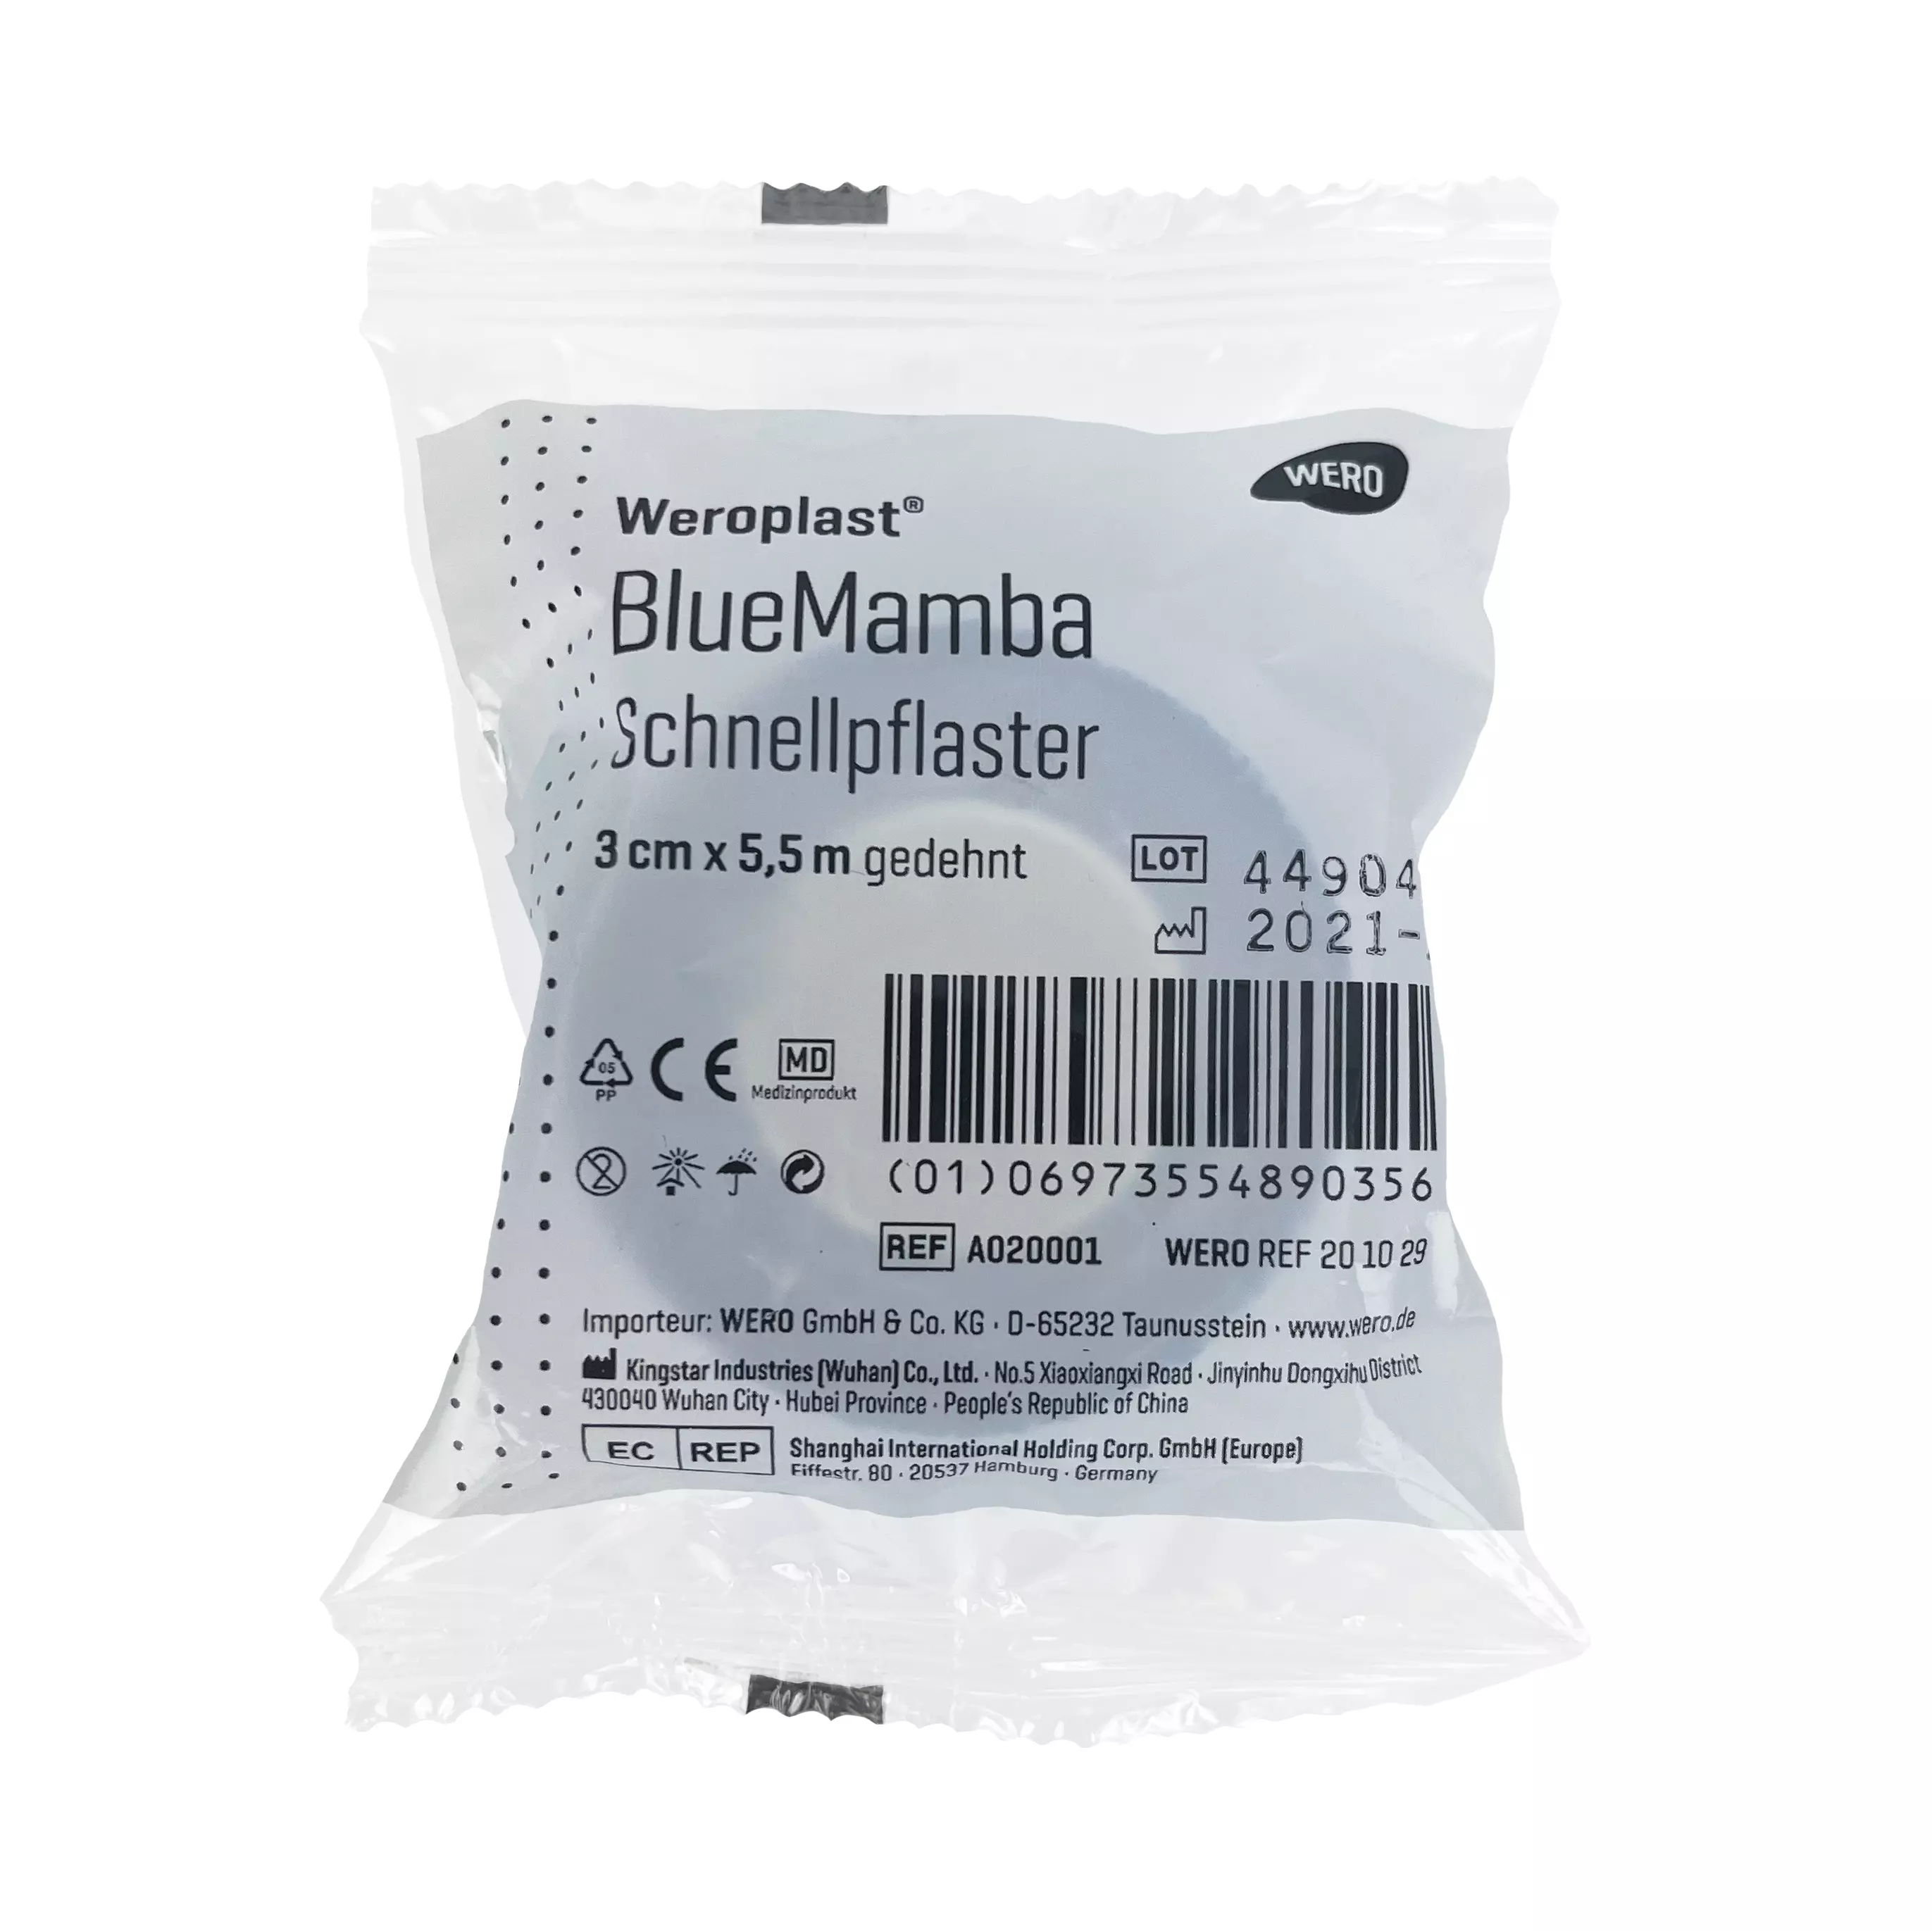 Weroplast® BlueMamba quick plasters - 1 pc